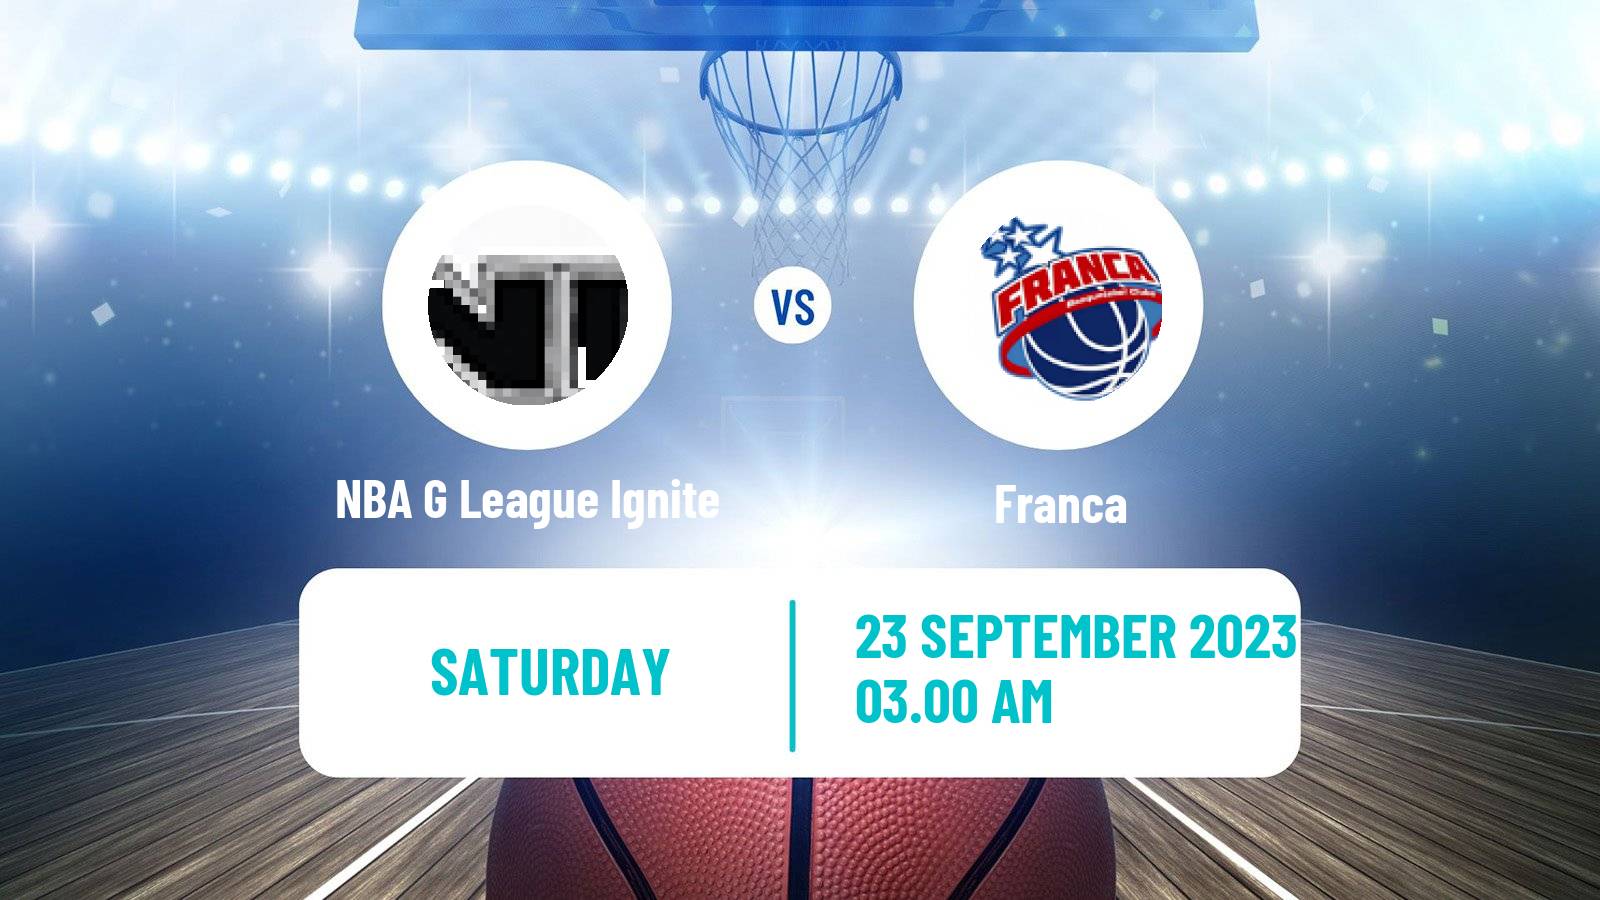 Basketball Basketball Intercontinental Cup NBA G League Ignite - Franca